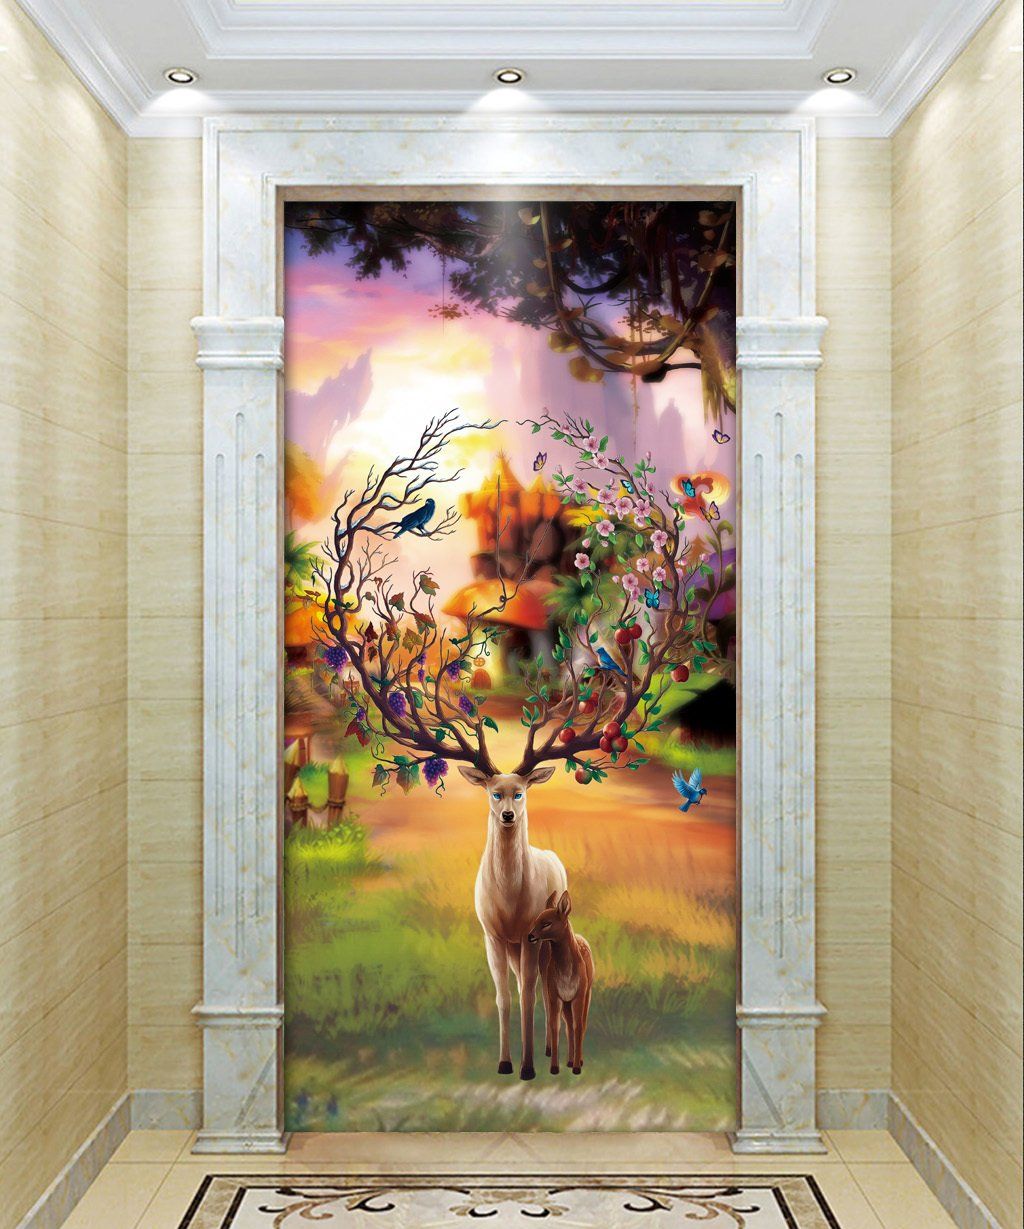 3D Sunlight Elk 551 Wall Murals Wallpaper AJ Wallpaper 2 